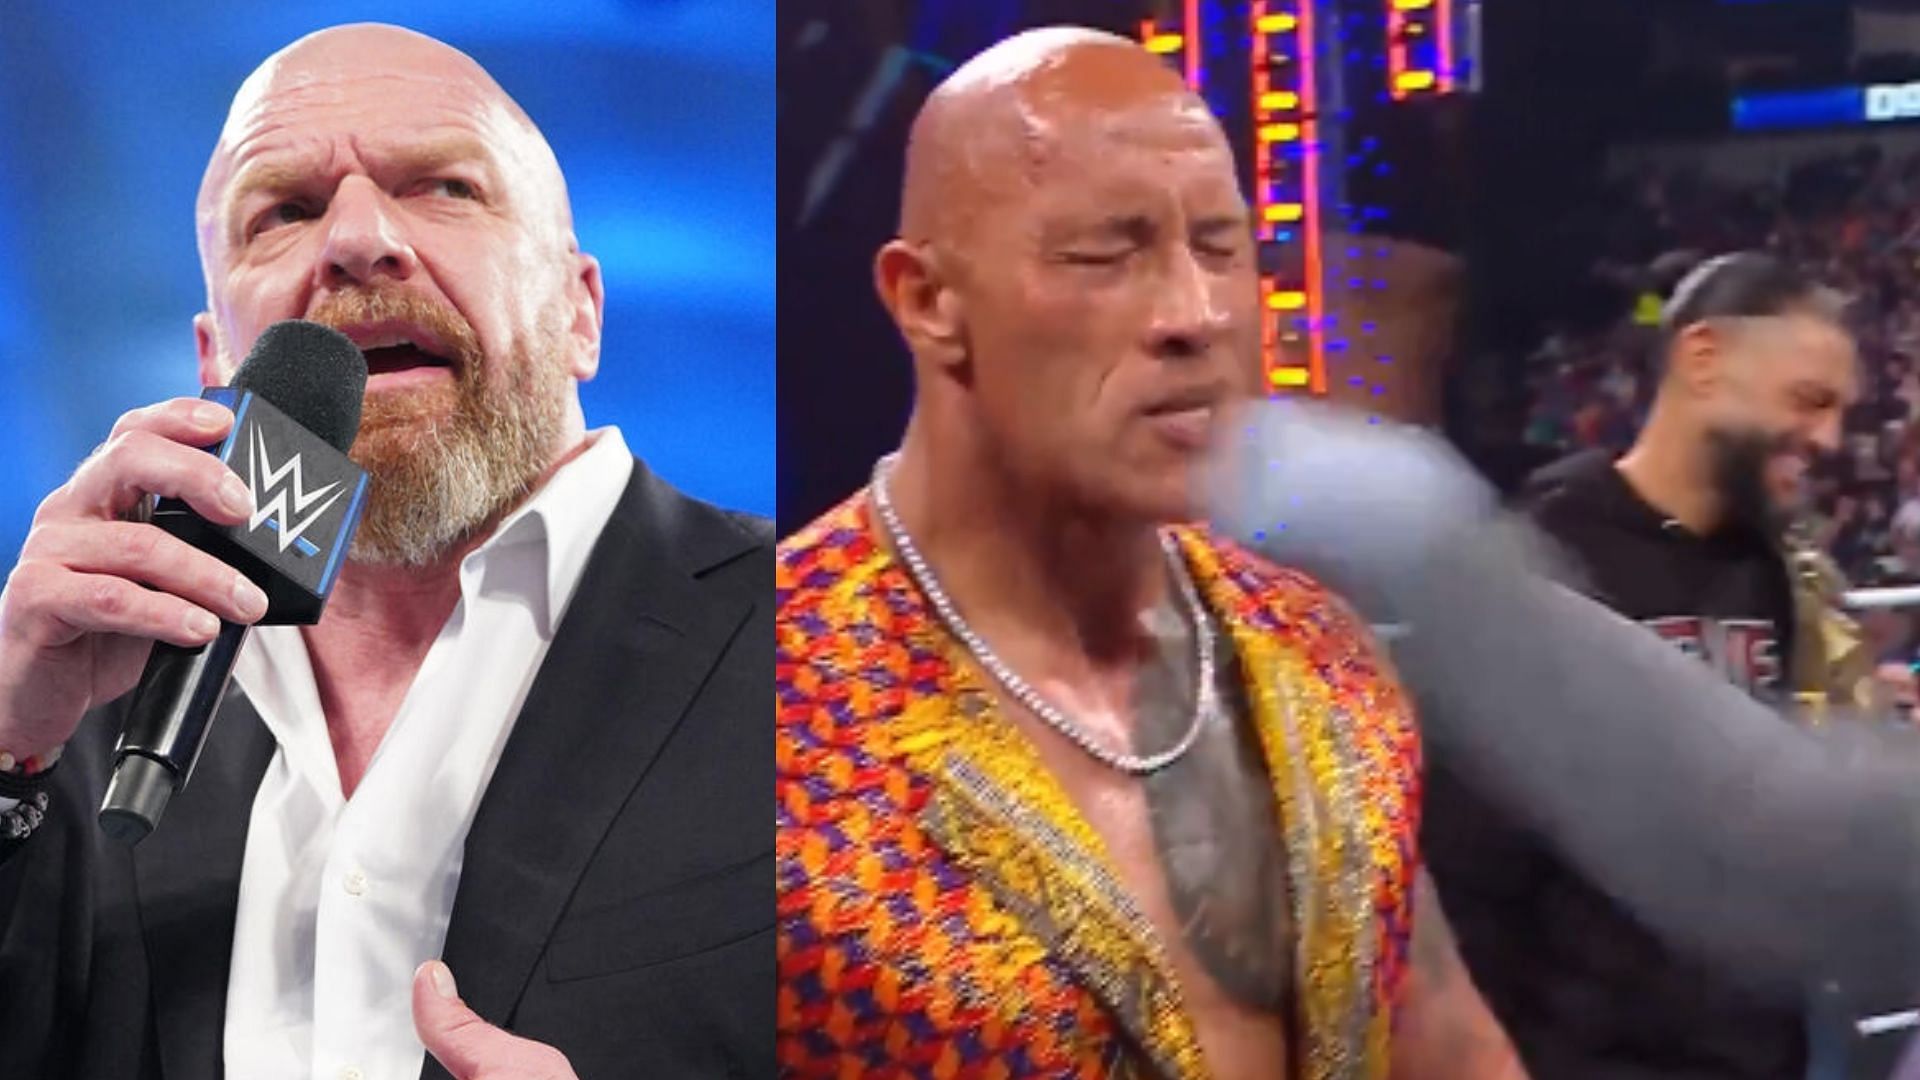 The Rock got slapped on WWE SmackDown.